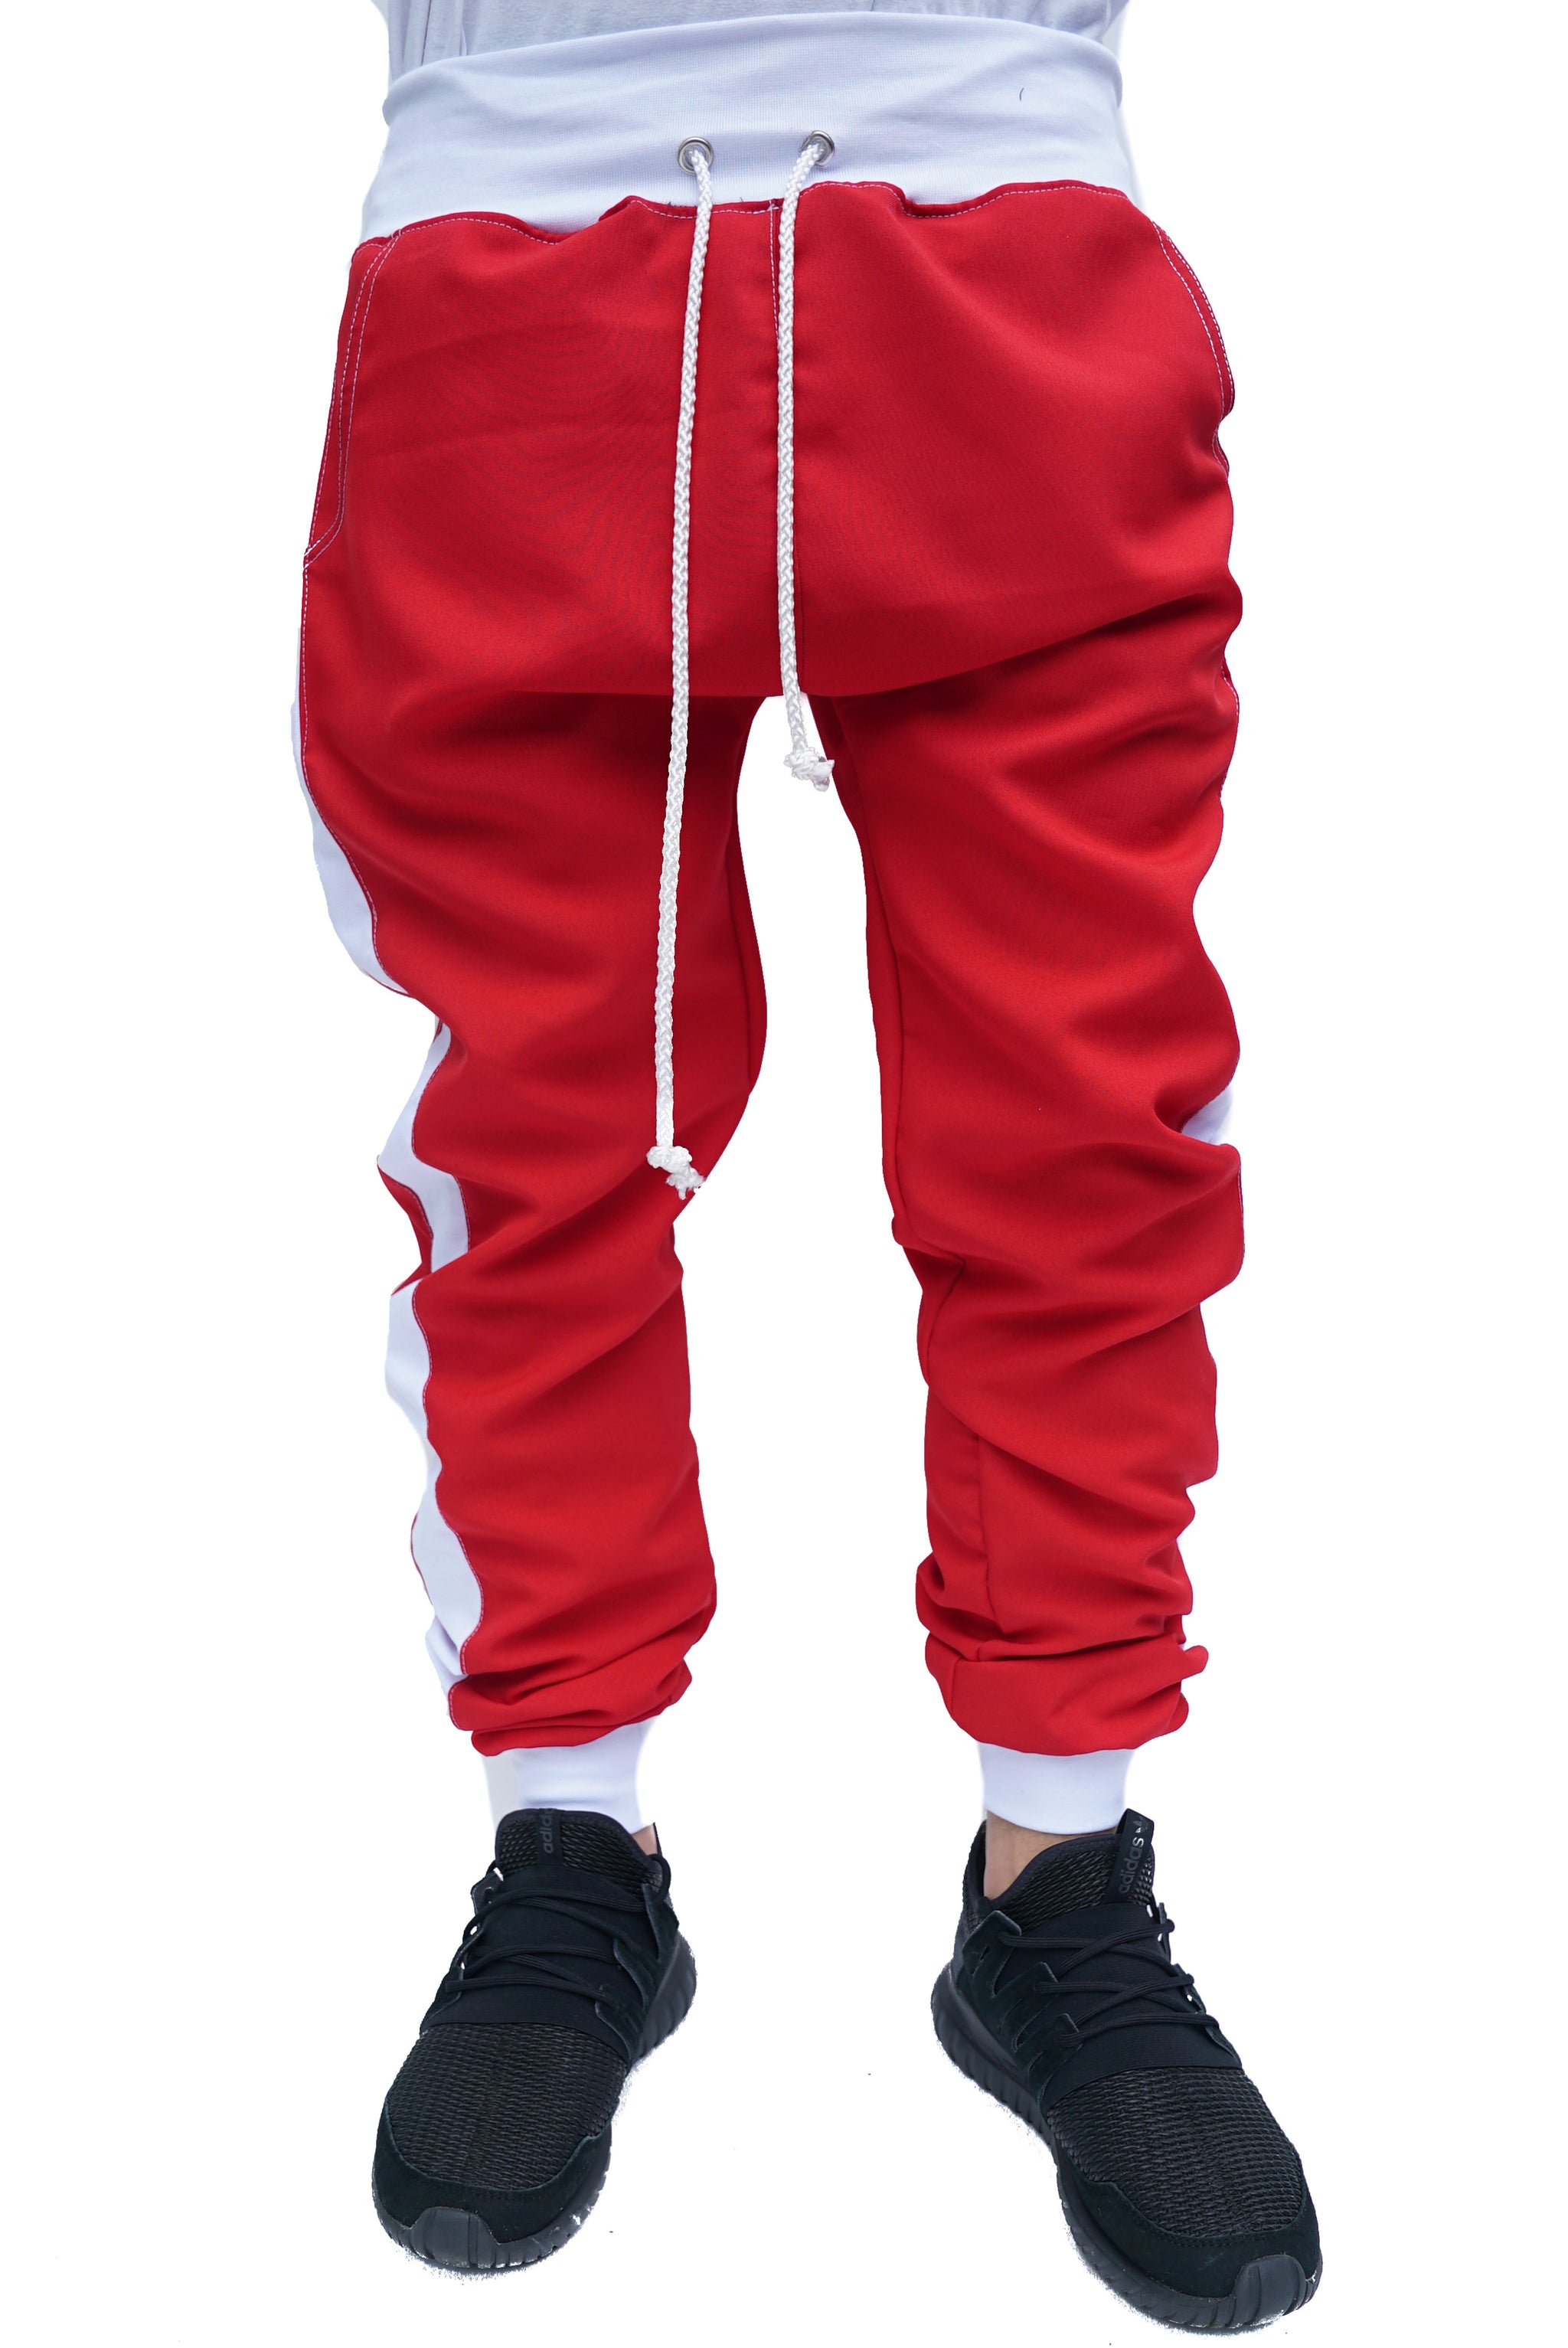 white track pants red stripe